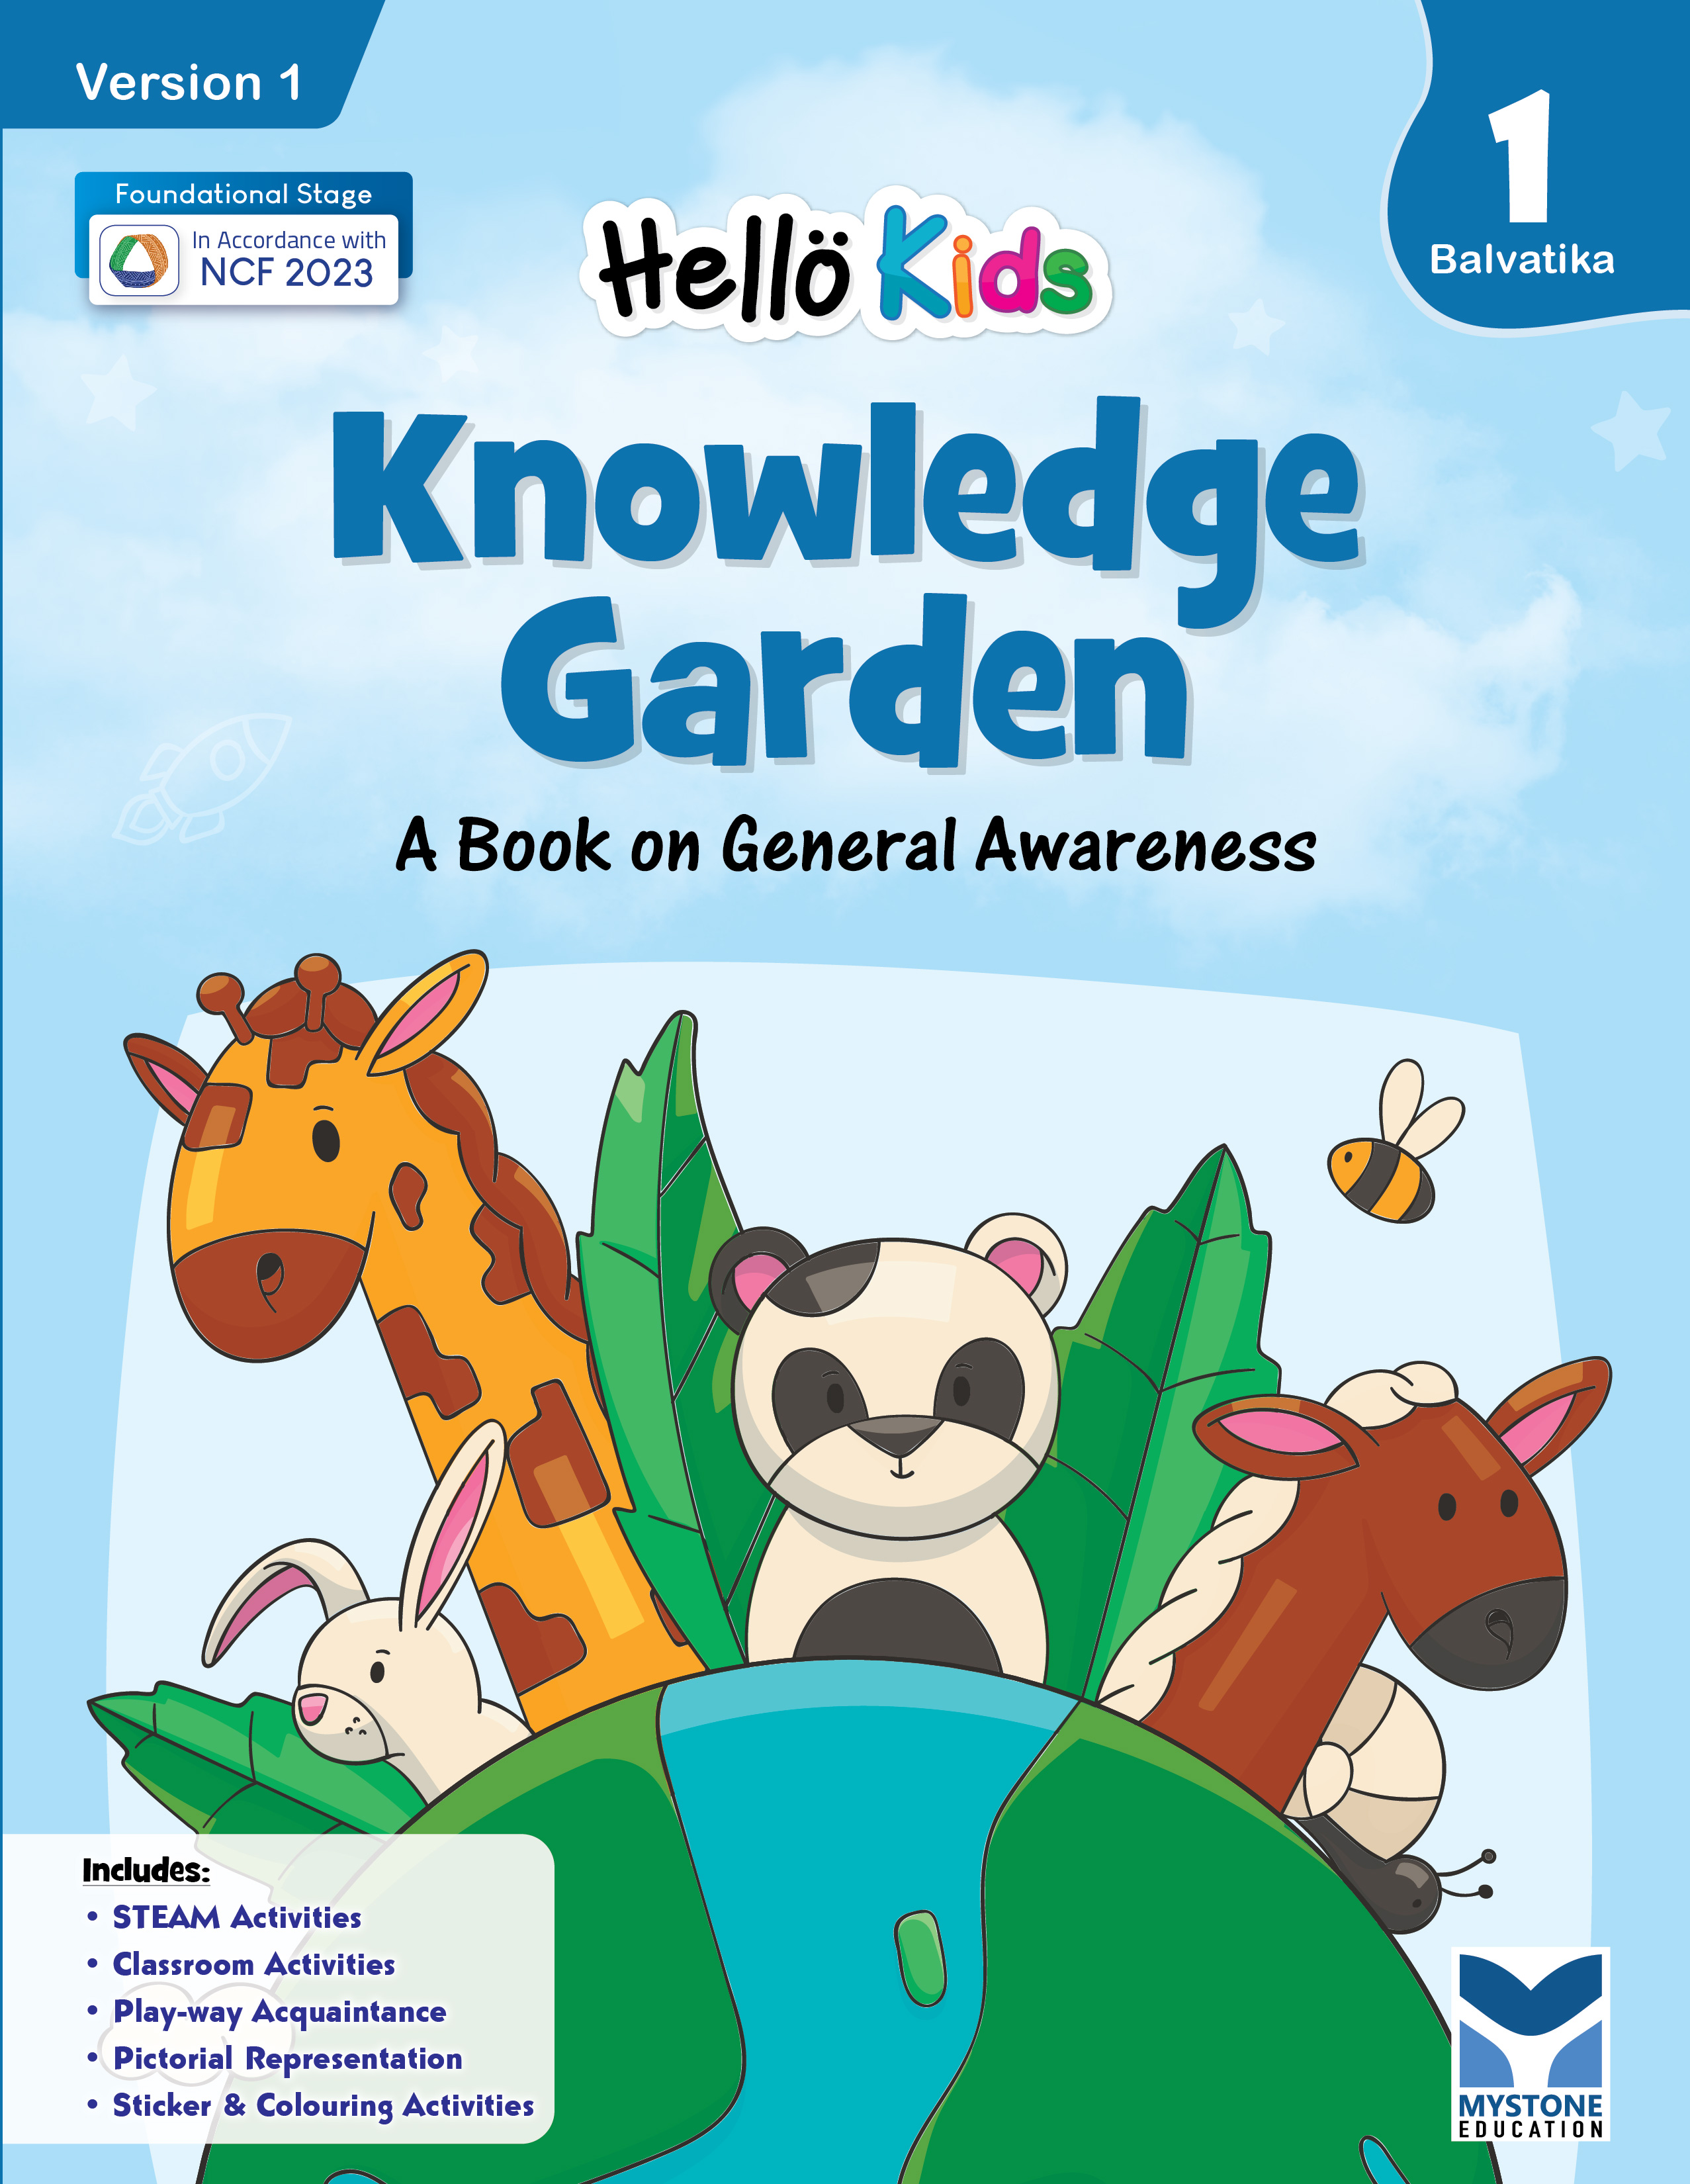 Hello Kids Knowledge Garden Balvatika 1 Ver. 1